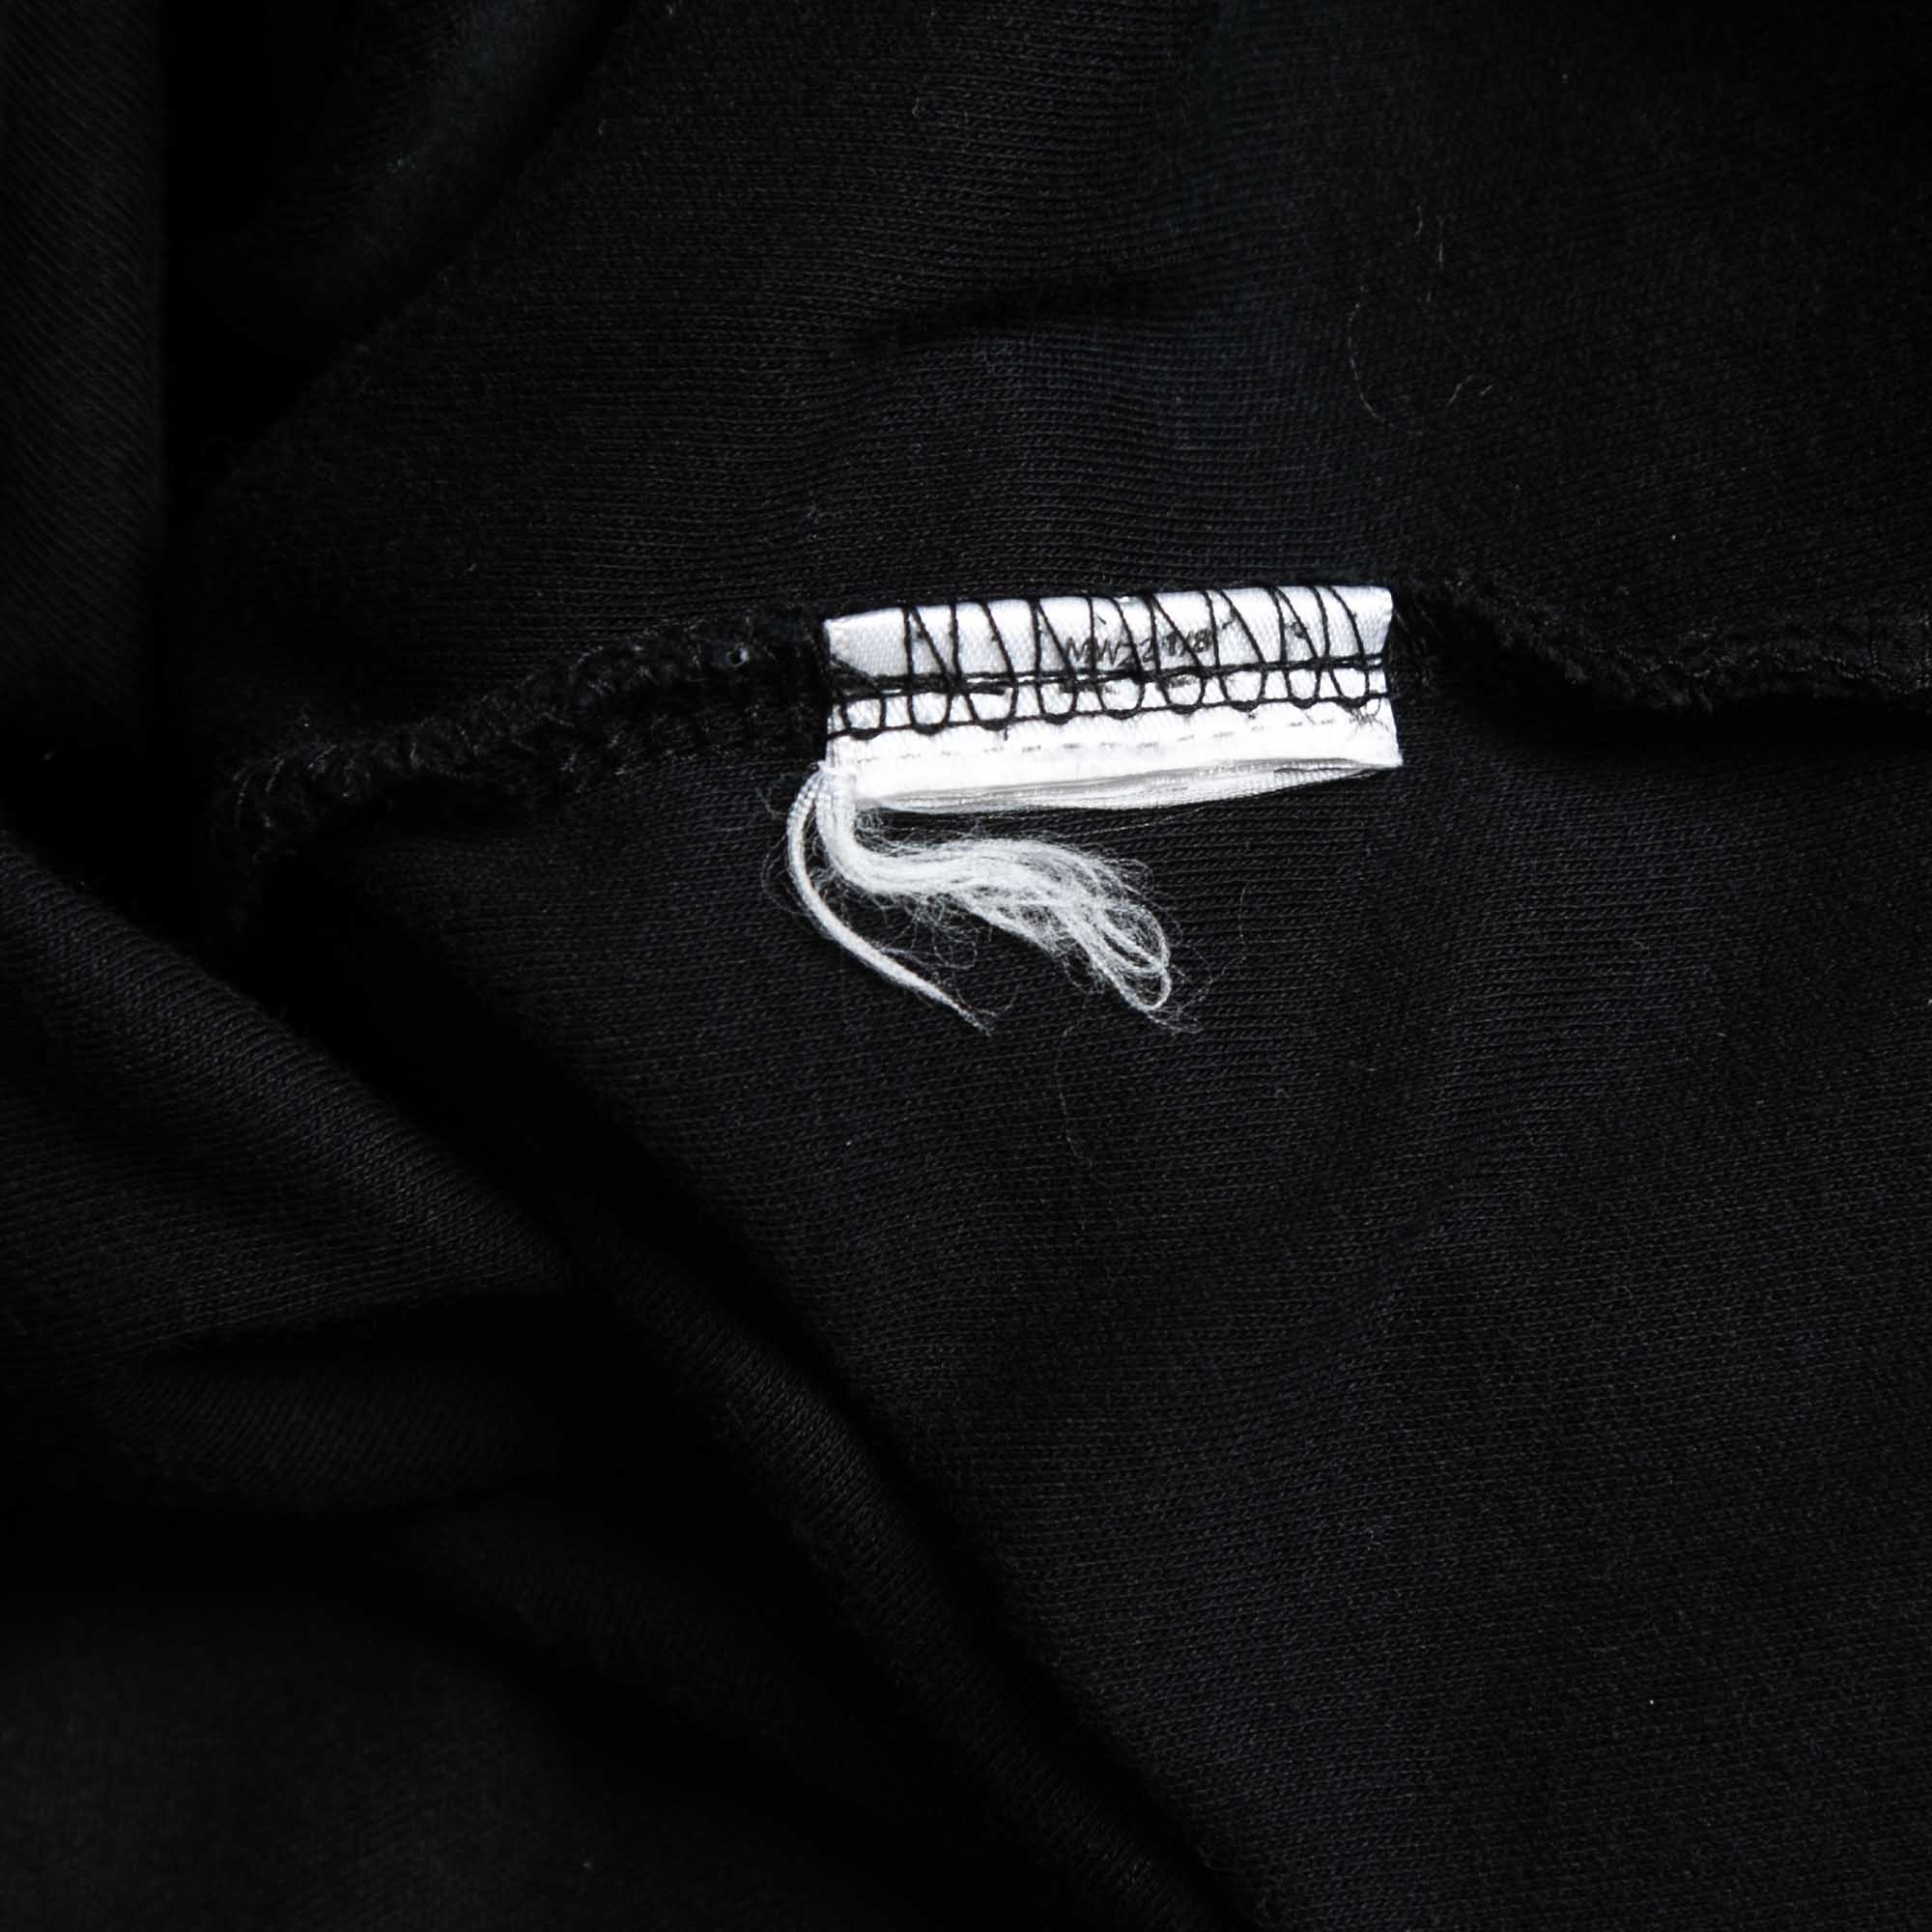 Polo Ralph Lauren Black Cotton Knit Polo T-Shirt L